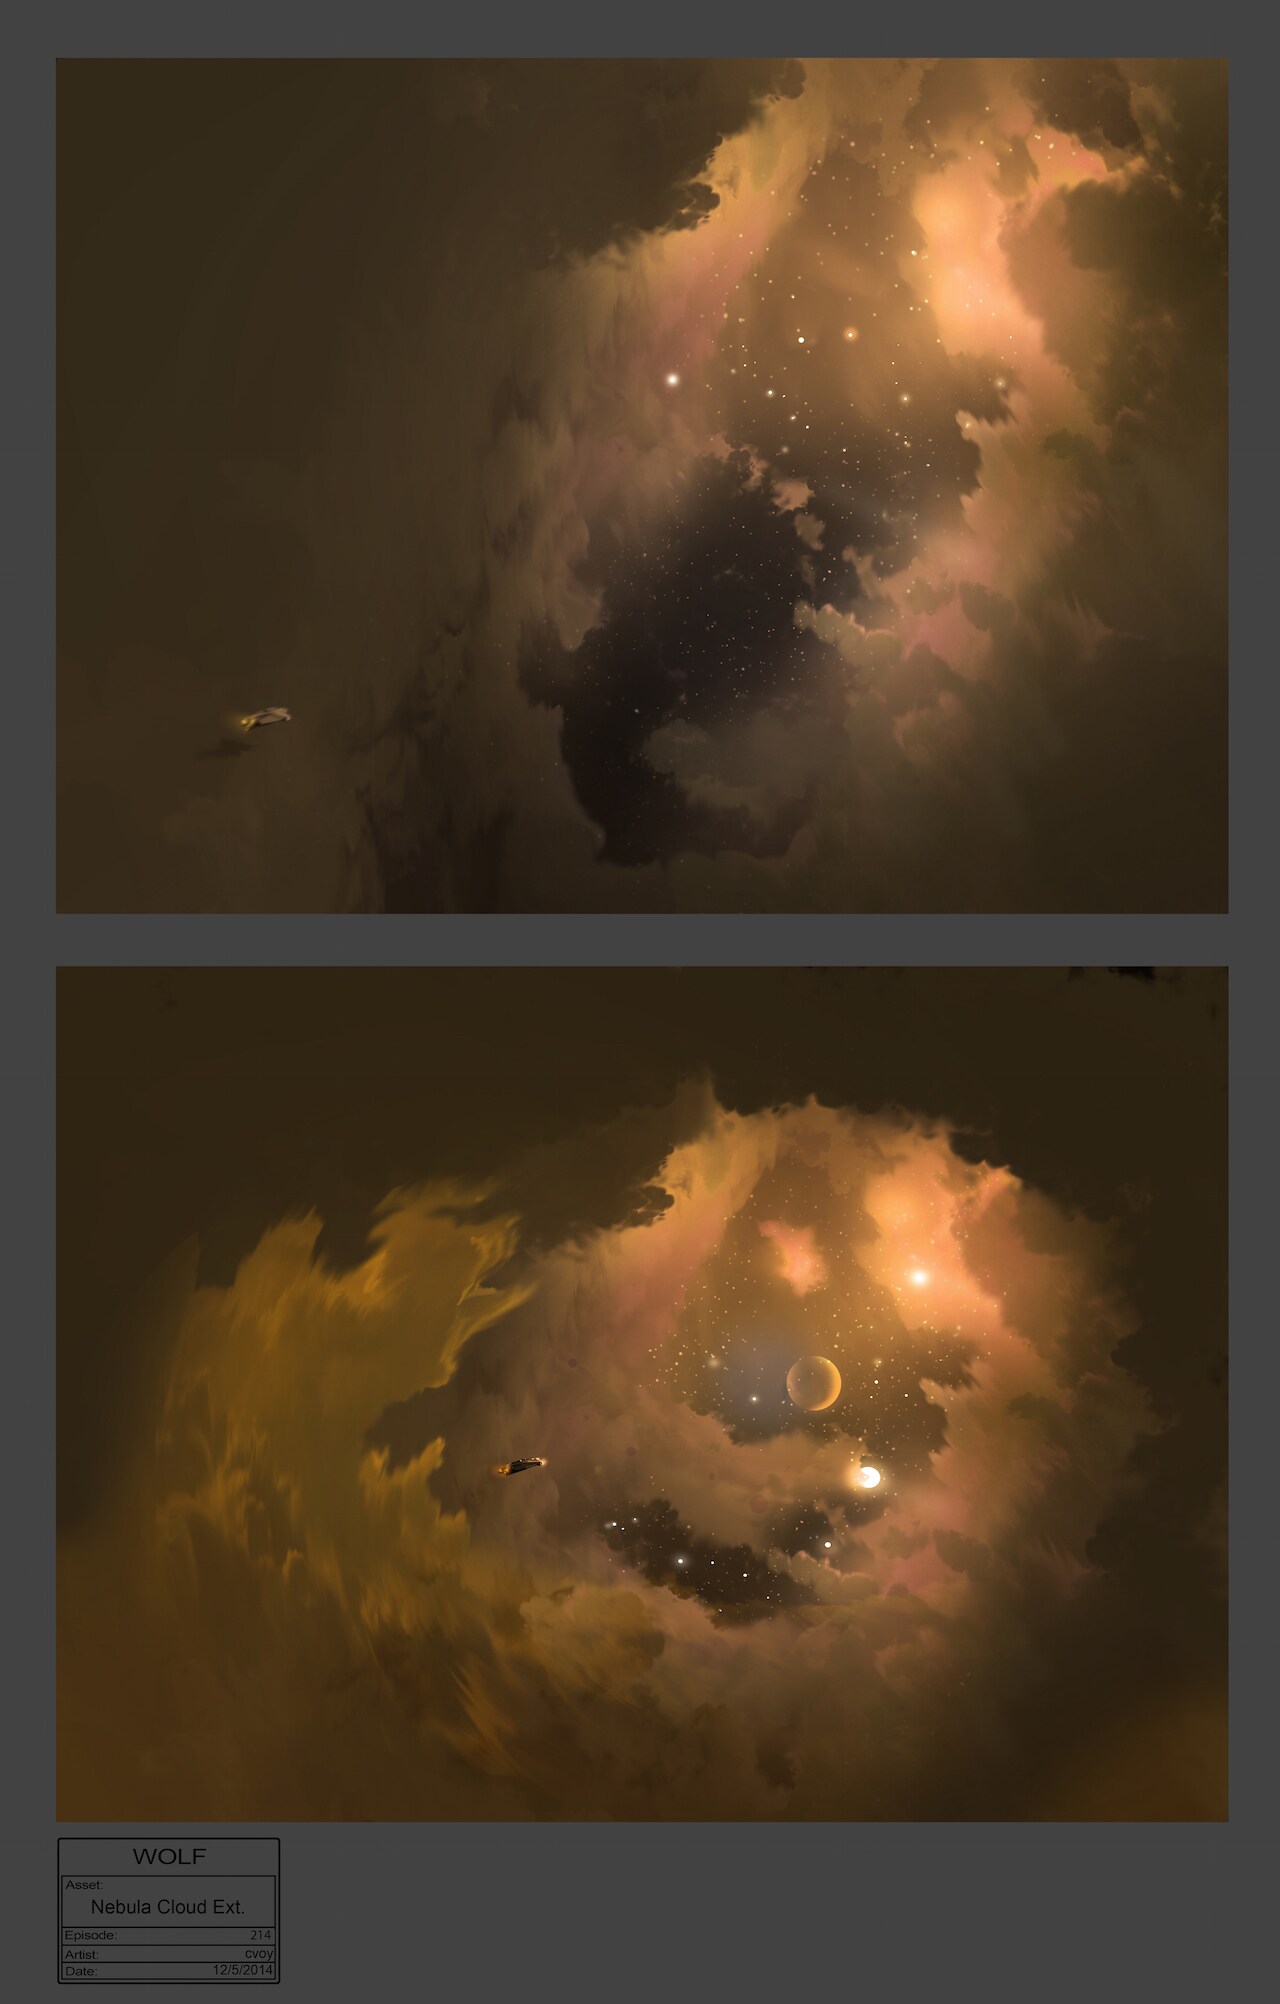 Nebula cloud exterior illustration by Chris Voy. 